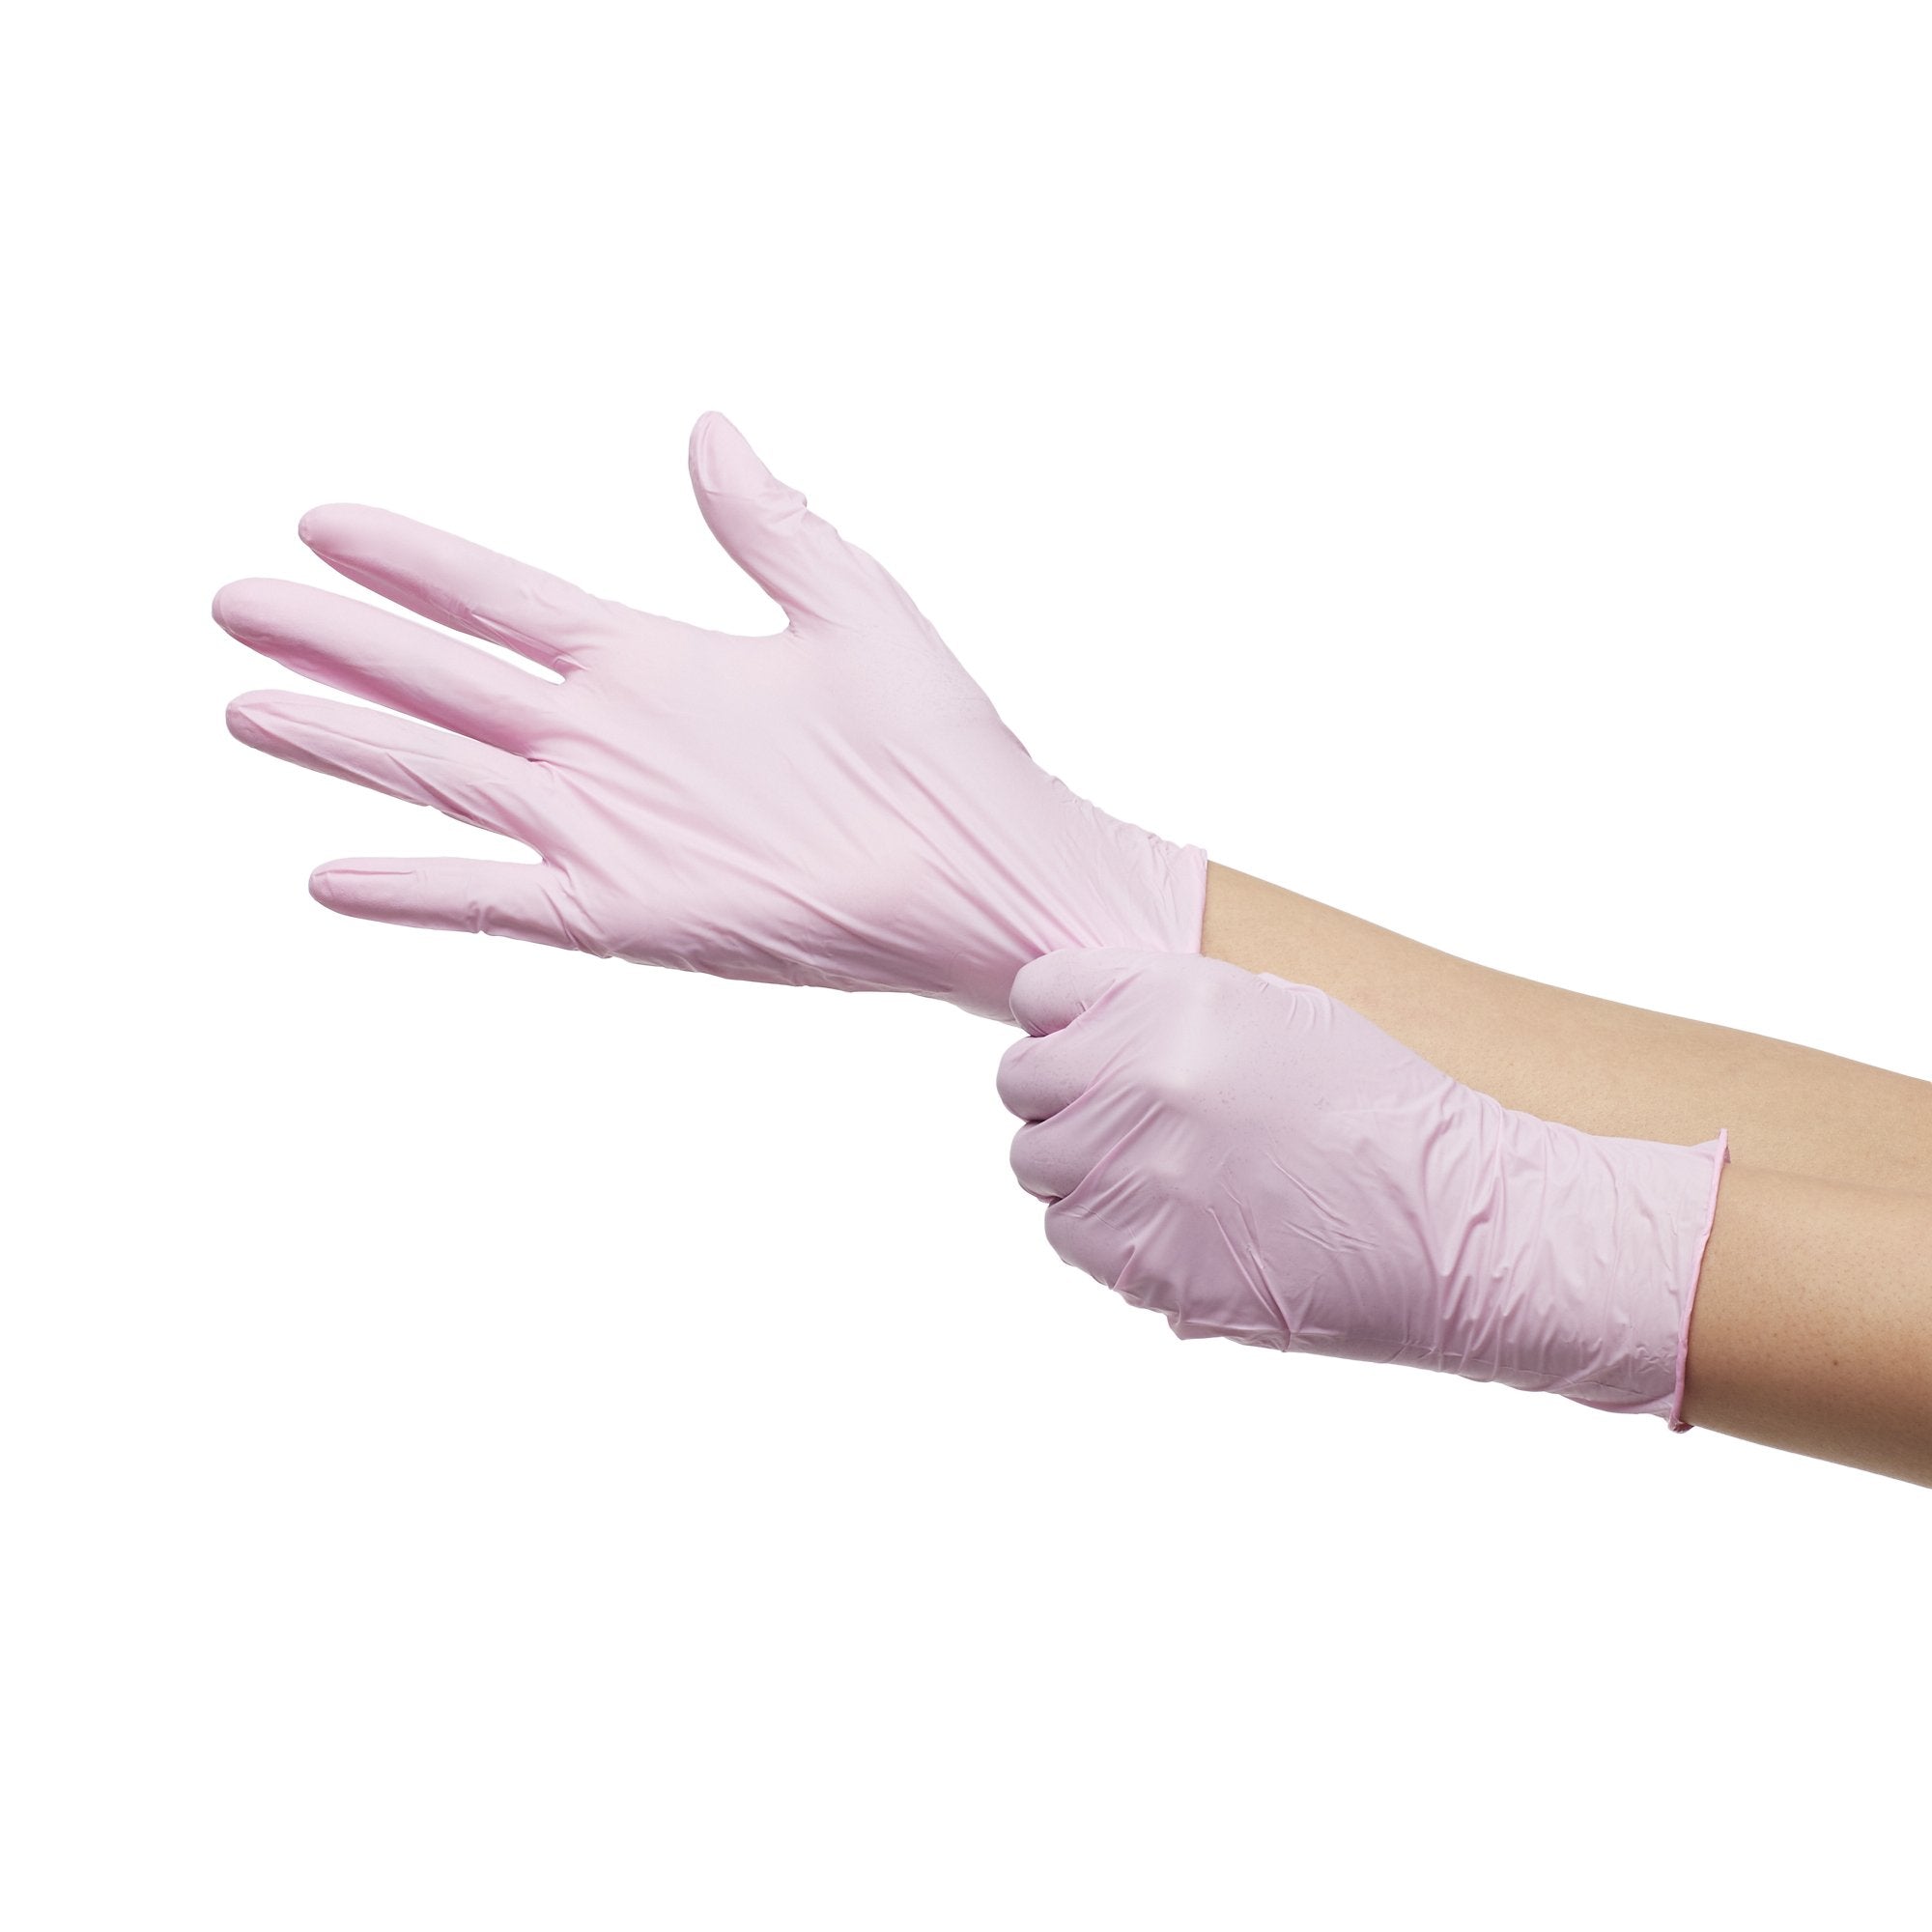 McKesson Pink Nitrile Exam Gloves, Medium - Support Breast Cancer Research